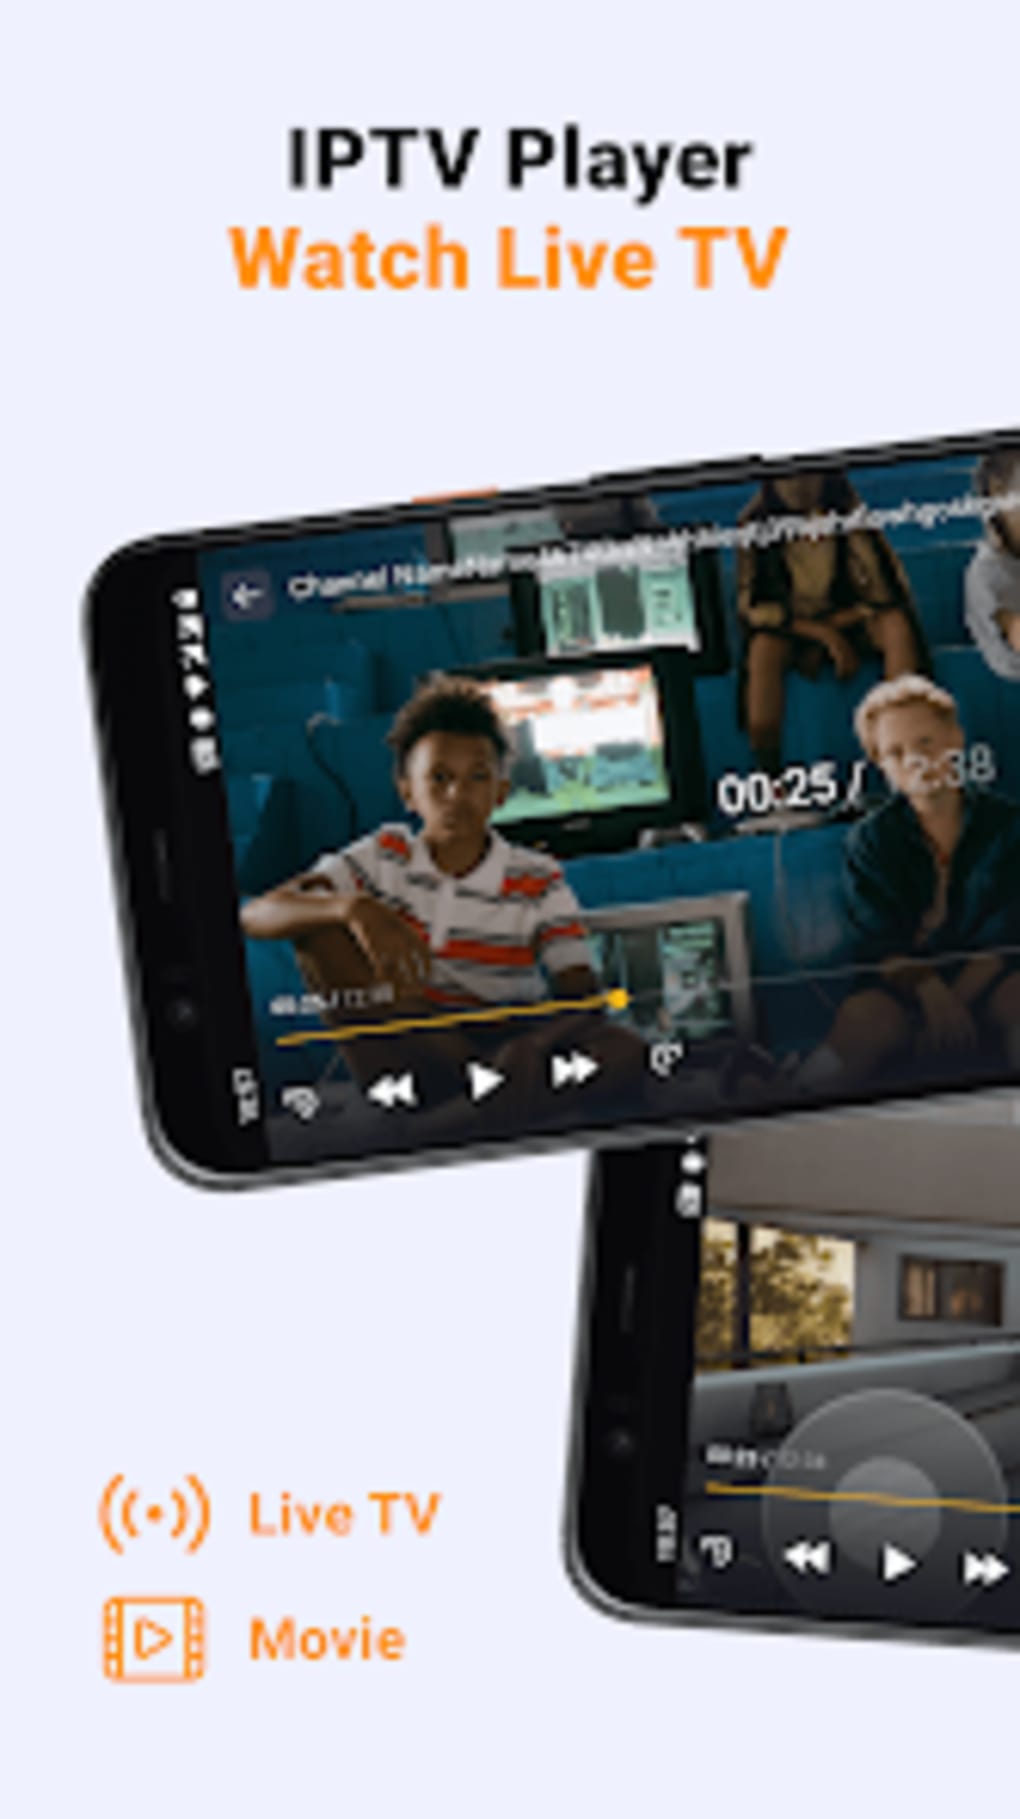 ITTV - Plus AndroidTV APK للاندرويد تنزيل